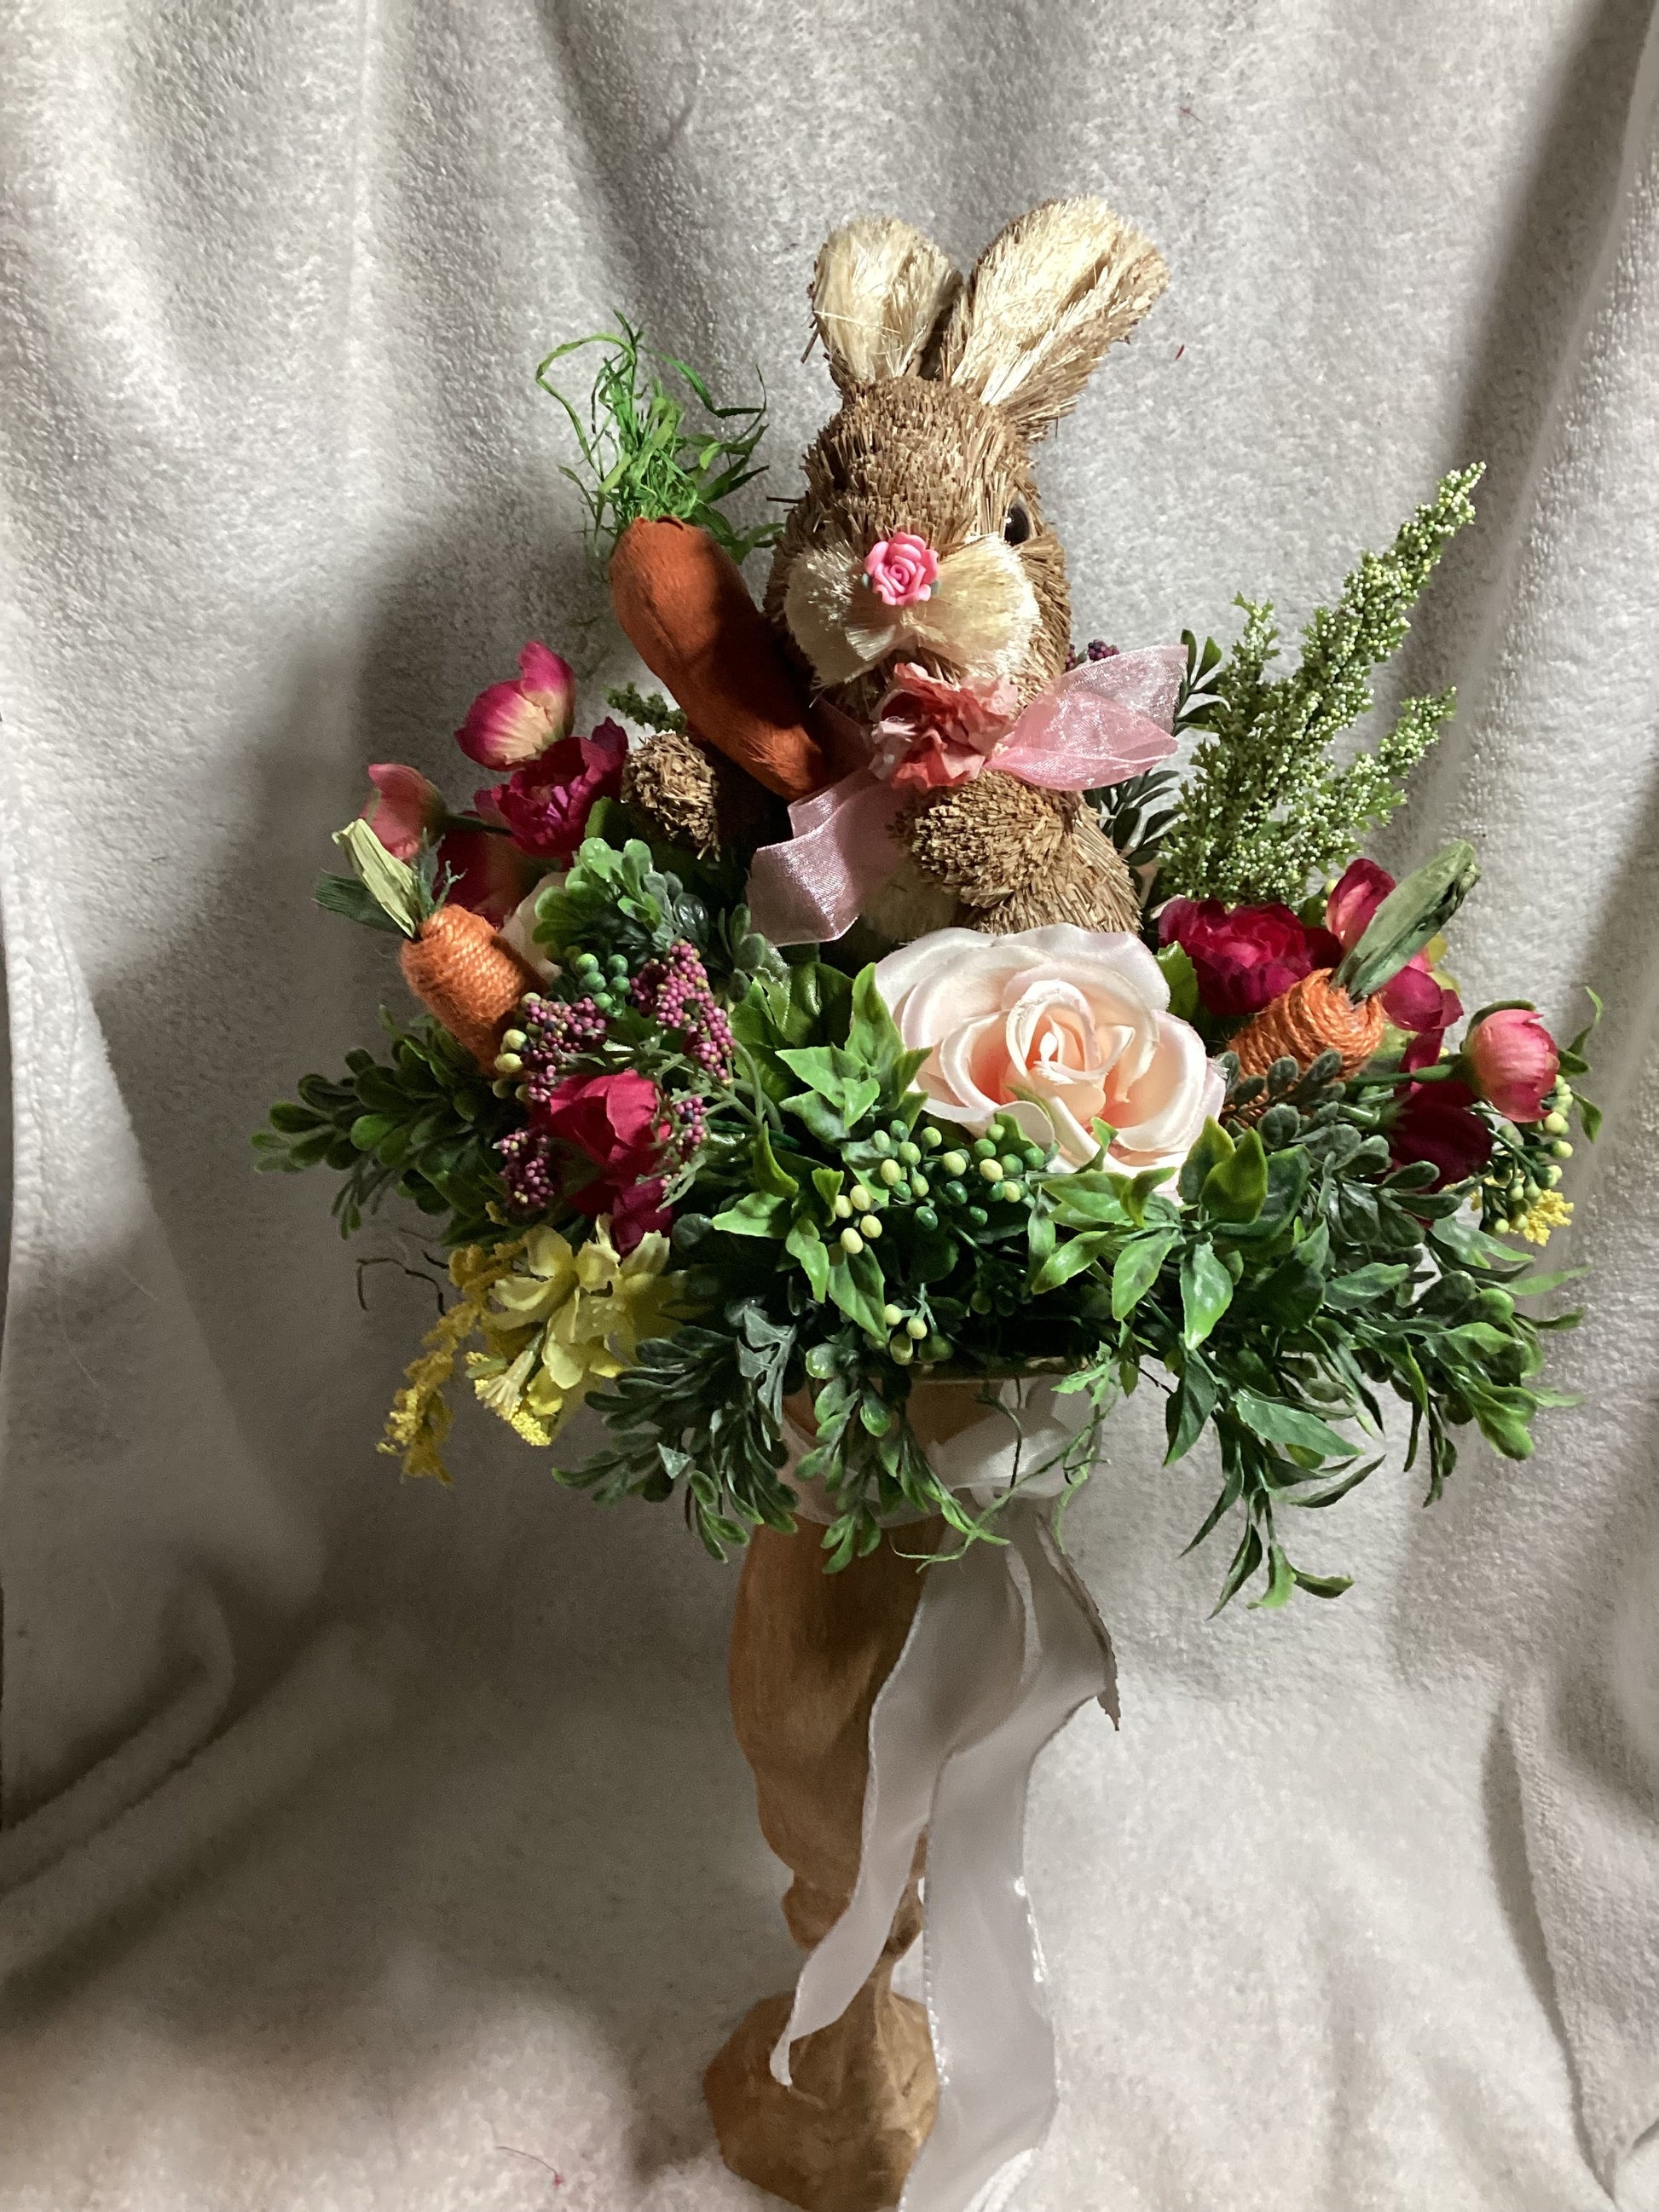 Bunny Floral Arrangements on pedestals - 2